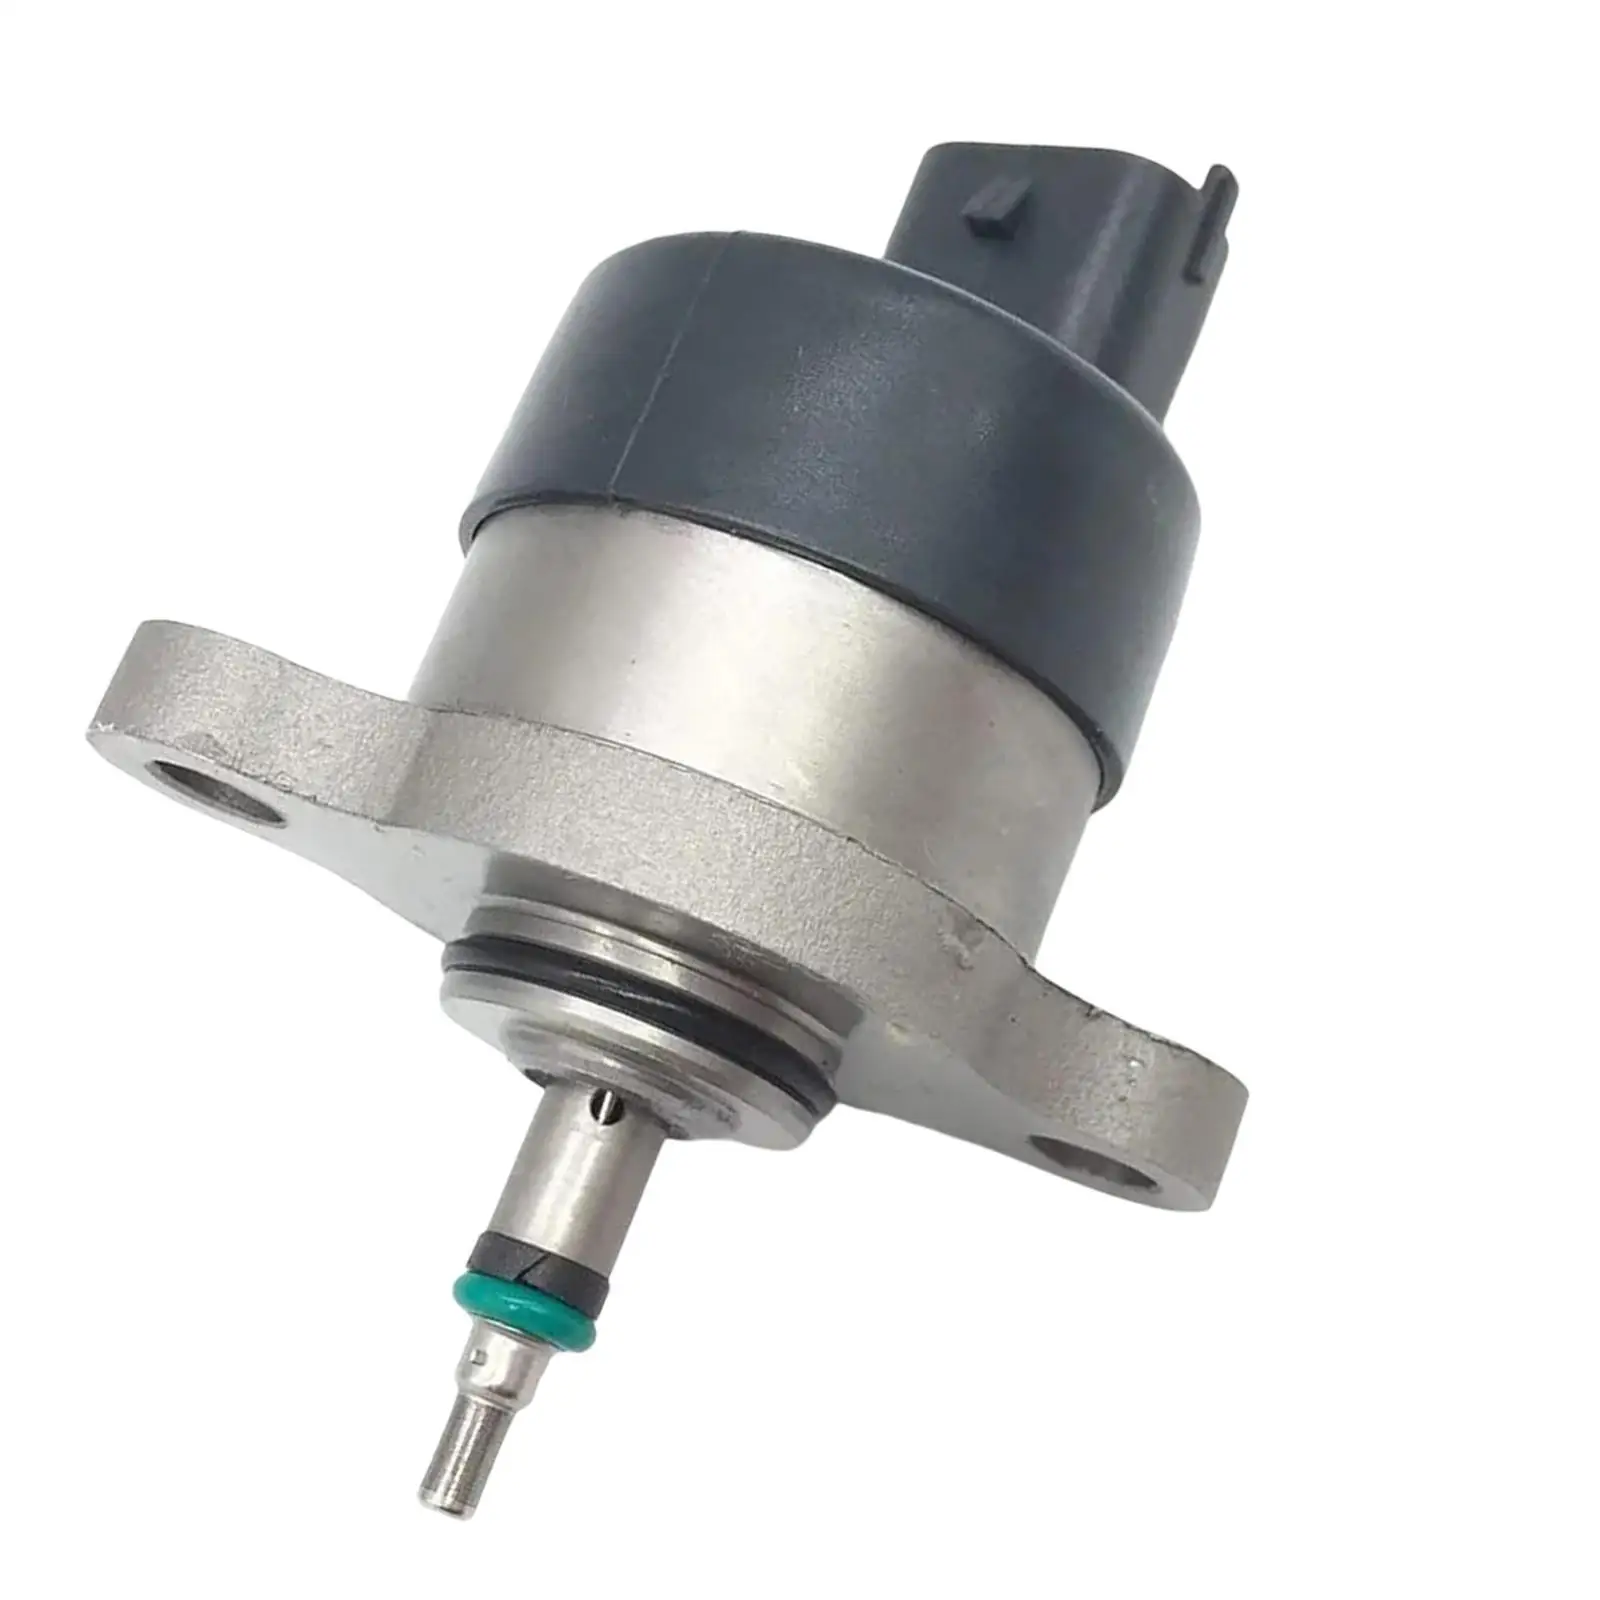 Common Rail Fuel Pressure Regulator Valve 0281002718 High Quality Replace Parts for Kia 1.5 2.0 Crdi Automotive Accessories